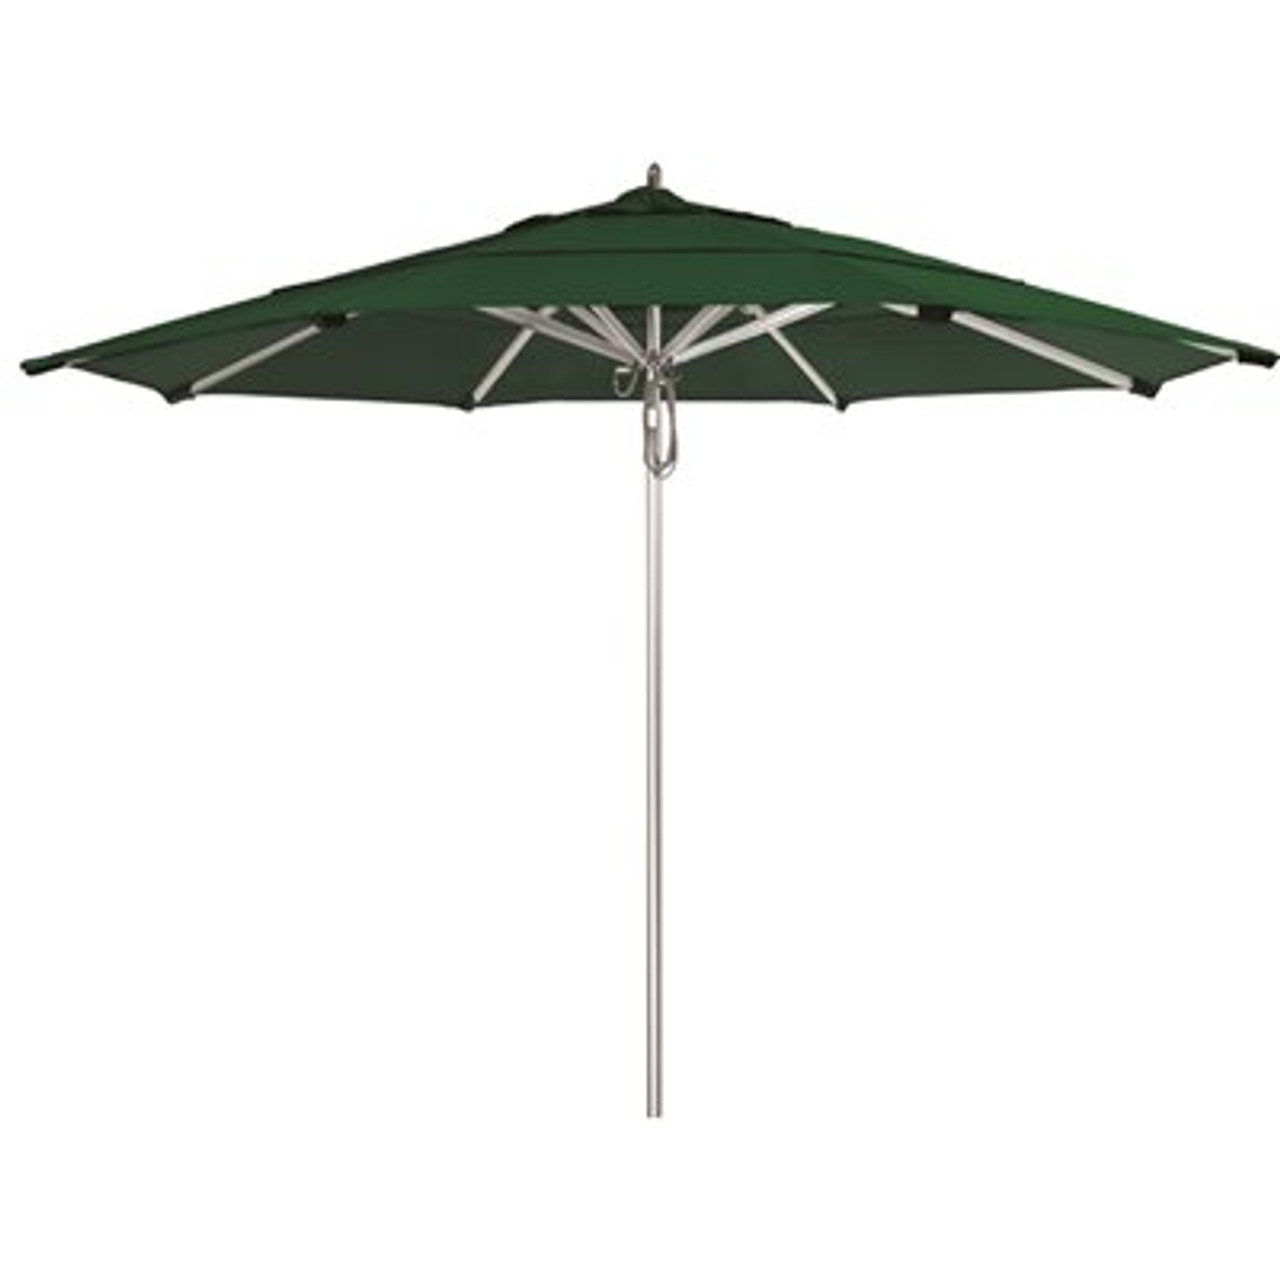 California Umbrella 11 ft. Silver Aluminum Commercial Market Patio Umbrella with Pulley Lift in Forest Green Sunbrella